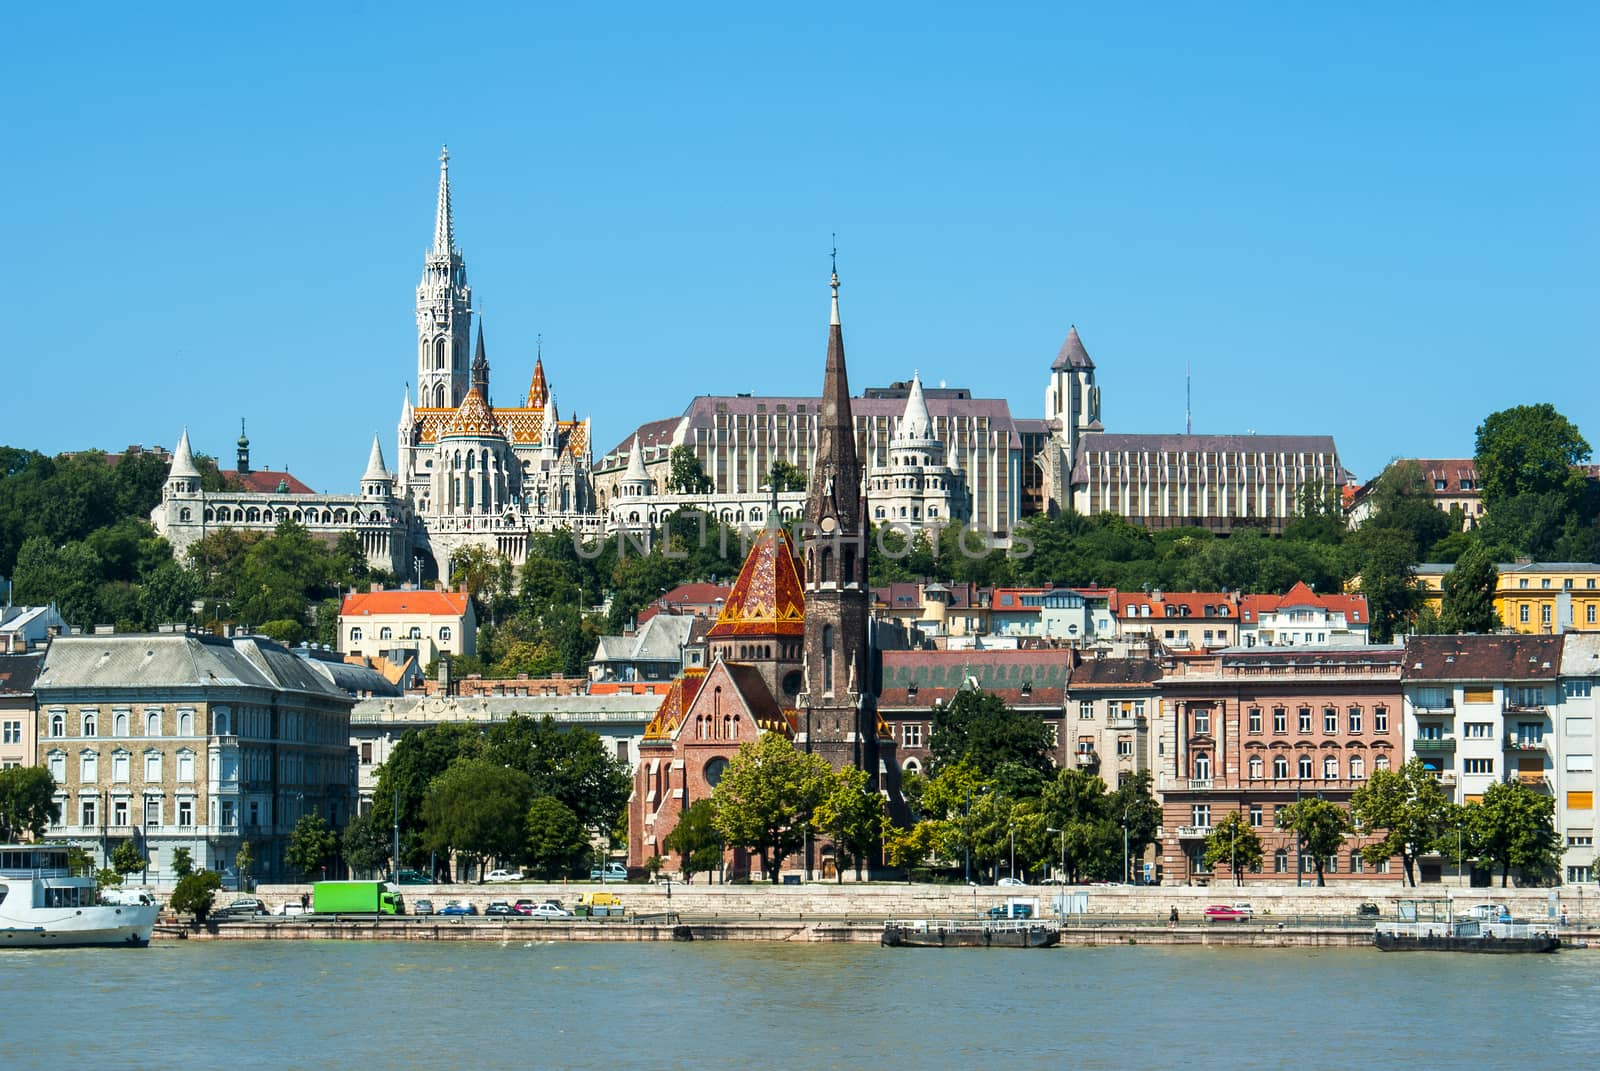 Panoramic view of Fishermen's bastion in Budapest, Hungary by papadimitriou